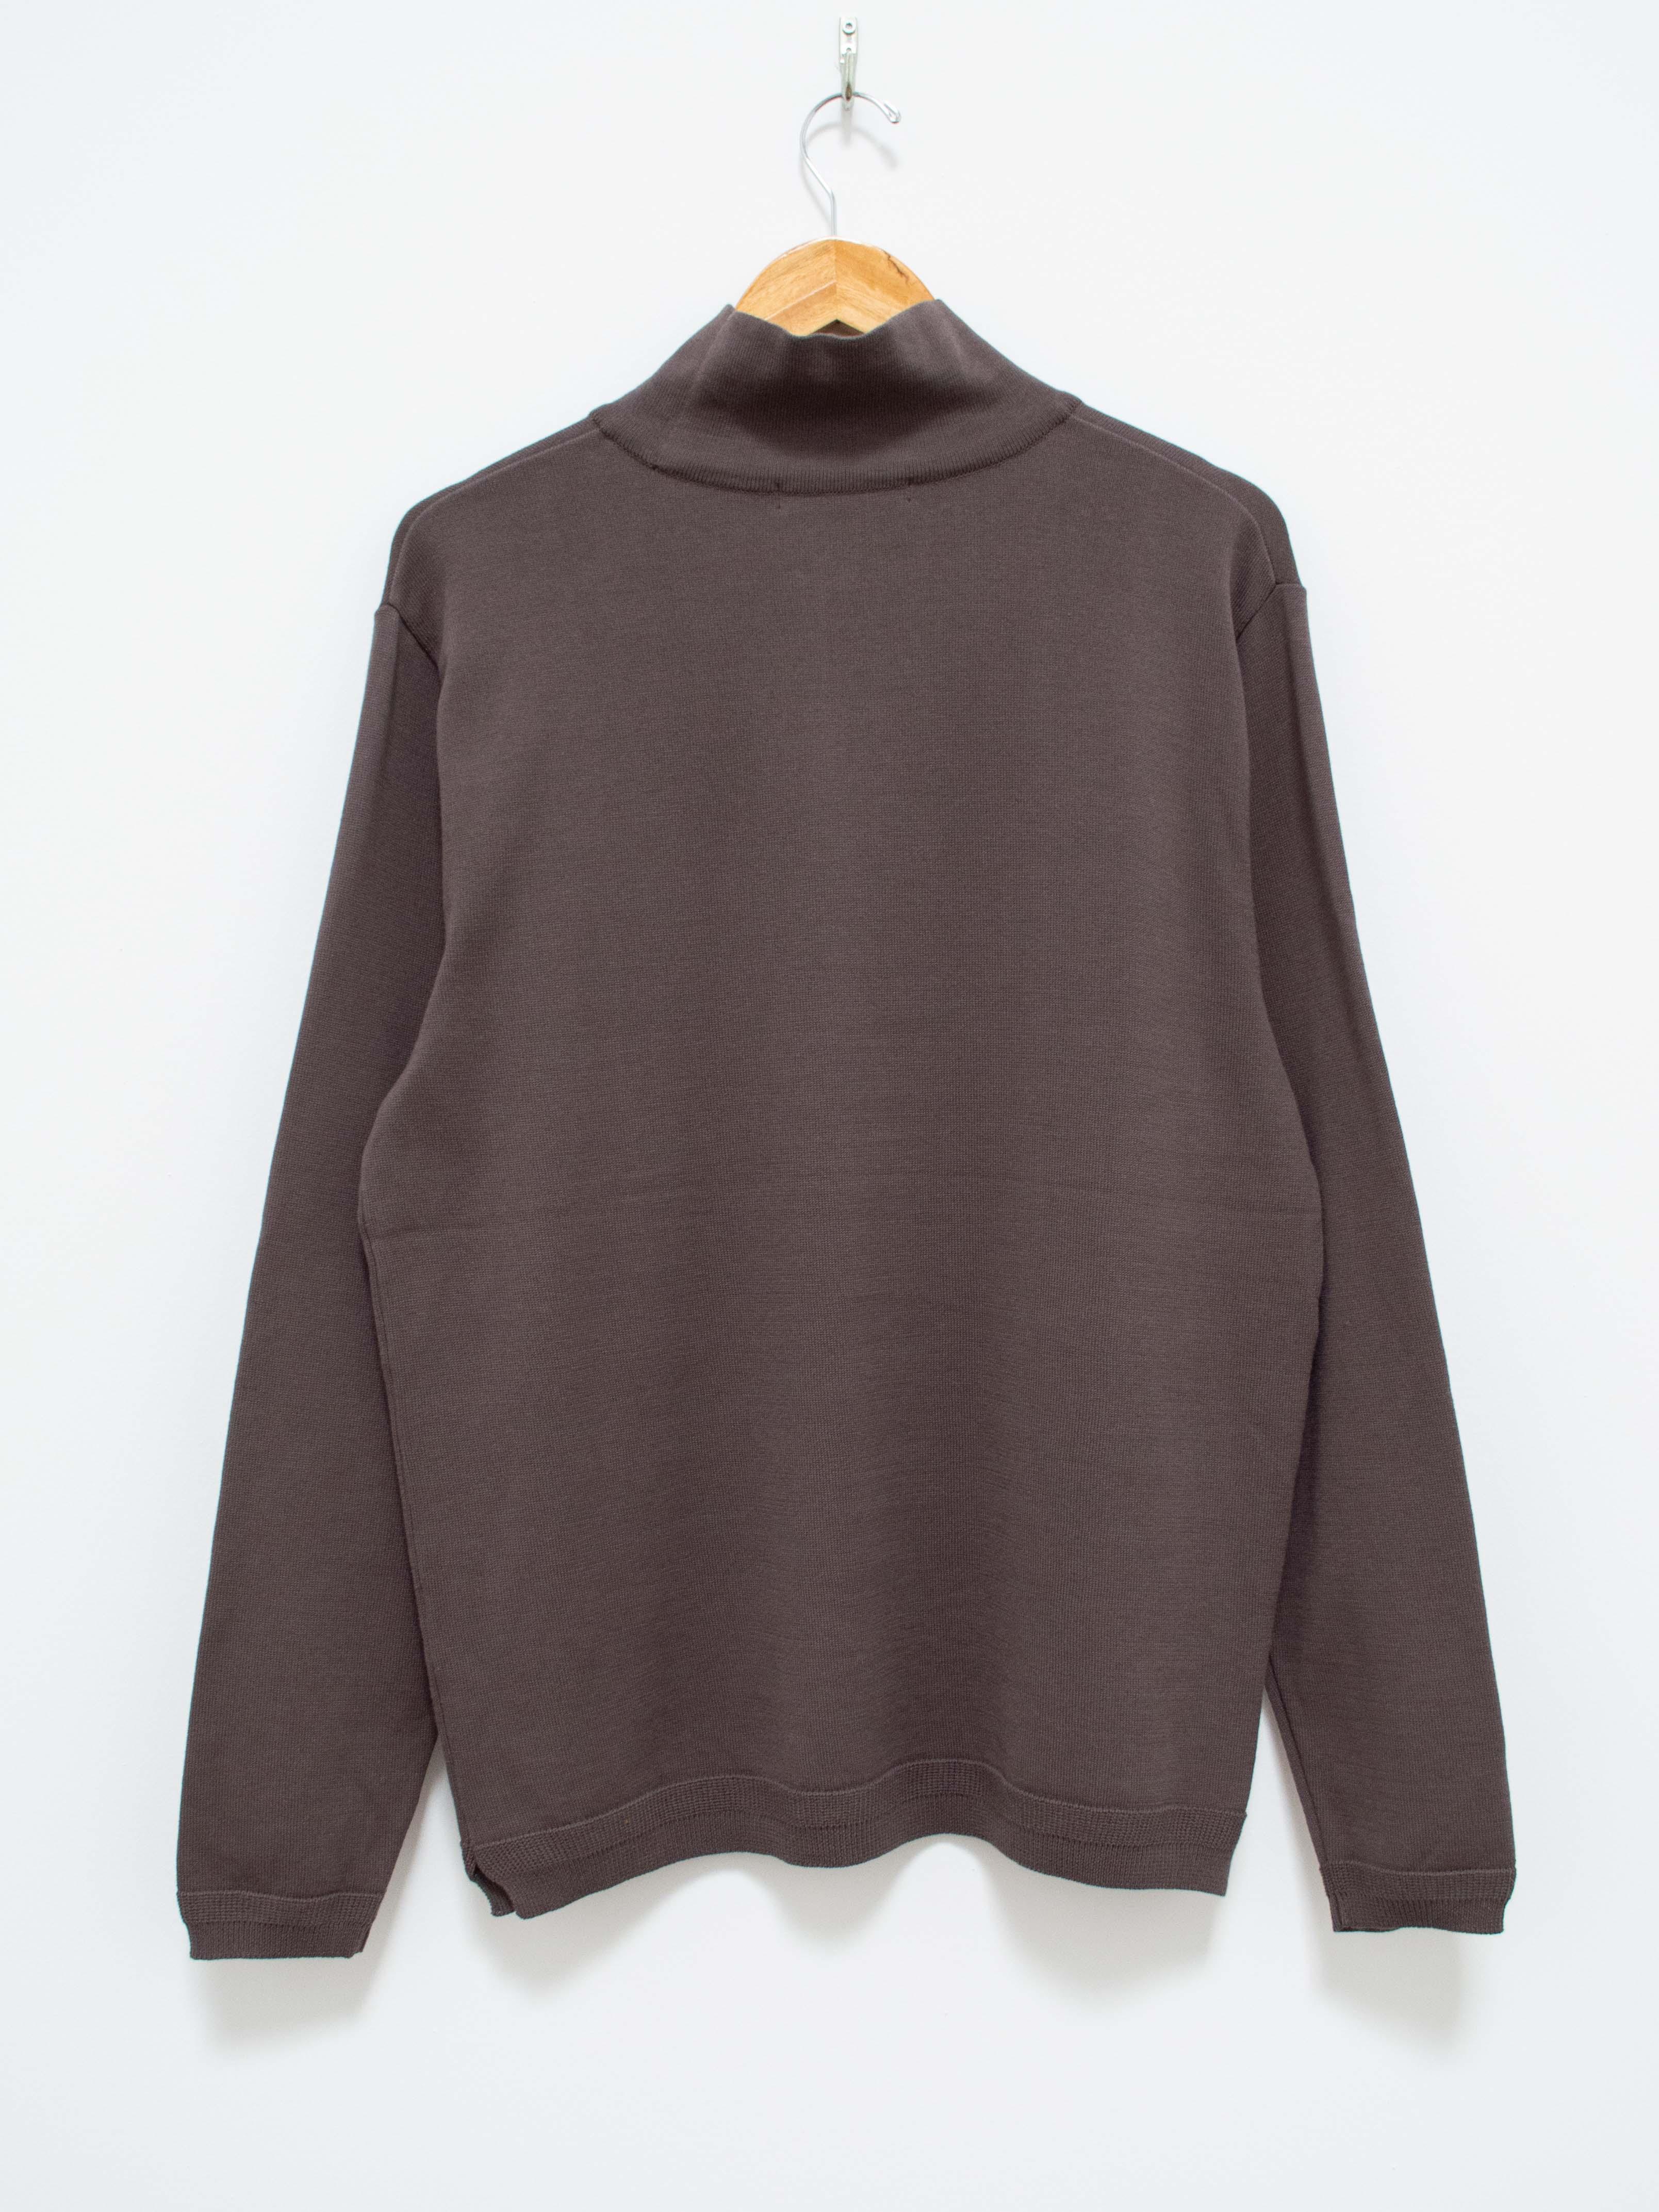 Namu Shop - Fujito Turtleneck Knit Shirt - Charcoal